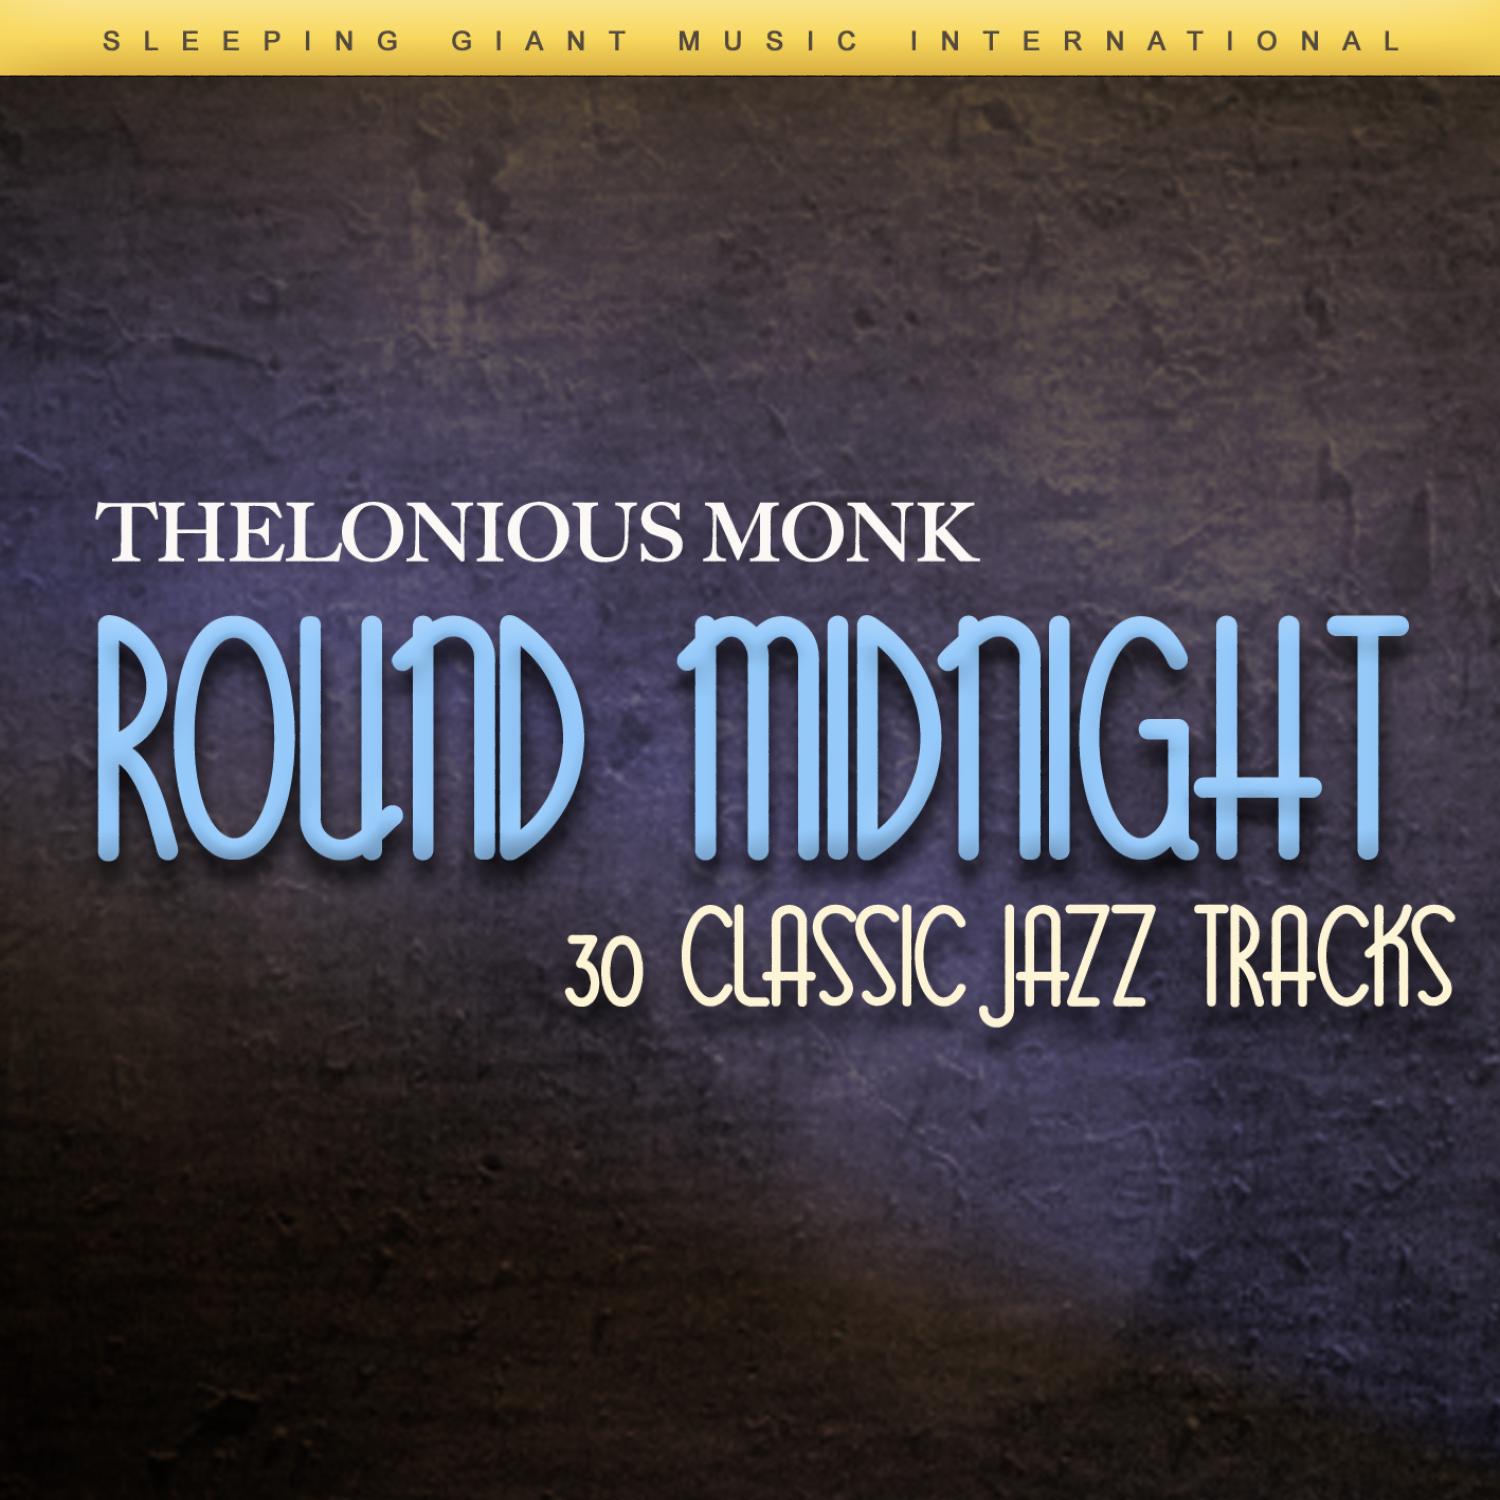 Round Midnight - 30 Classic Jazz Tracks